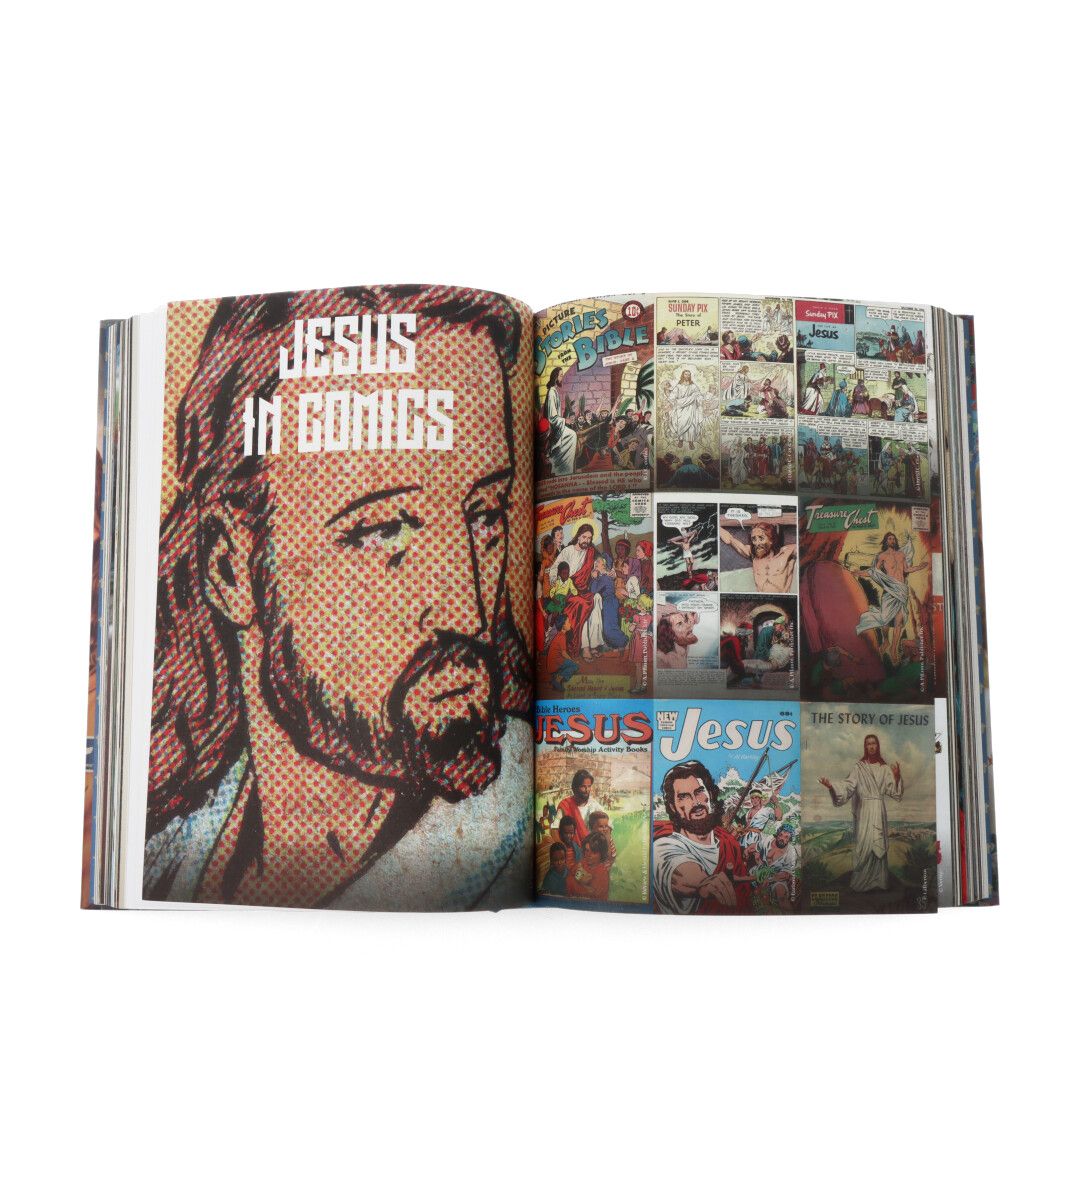 Jesus Now : Art + Pop Culture